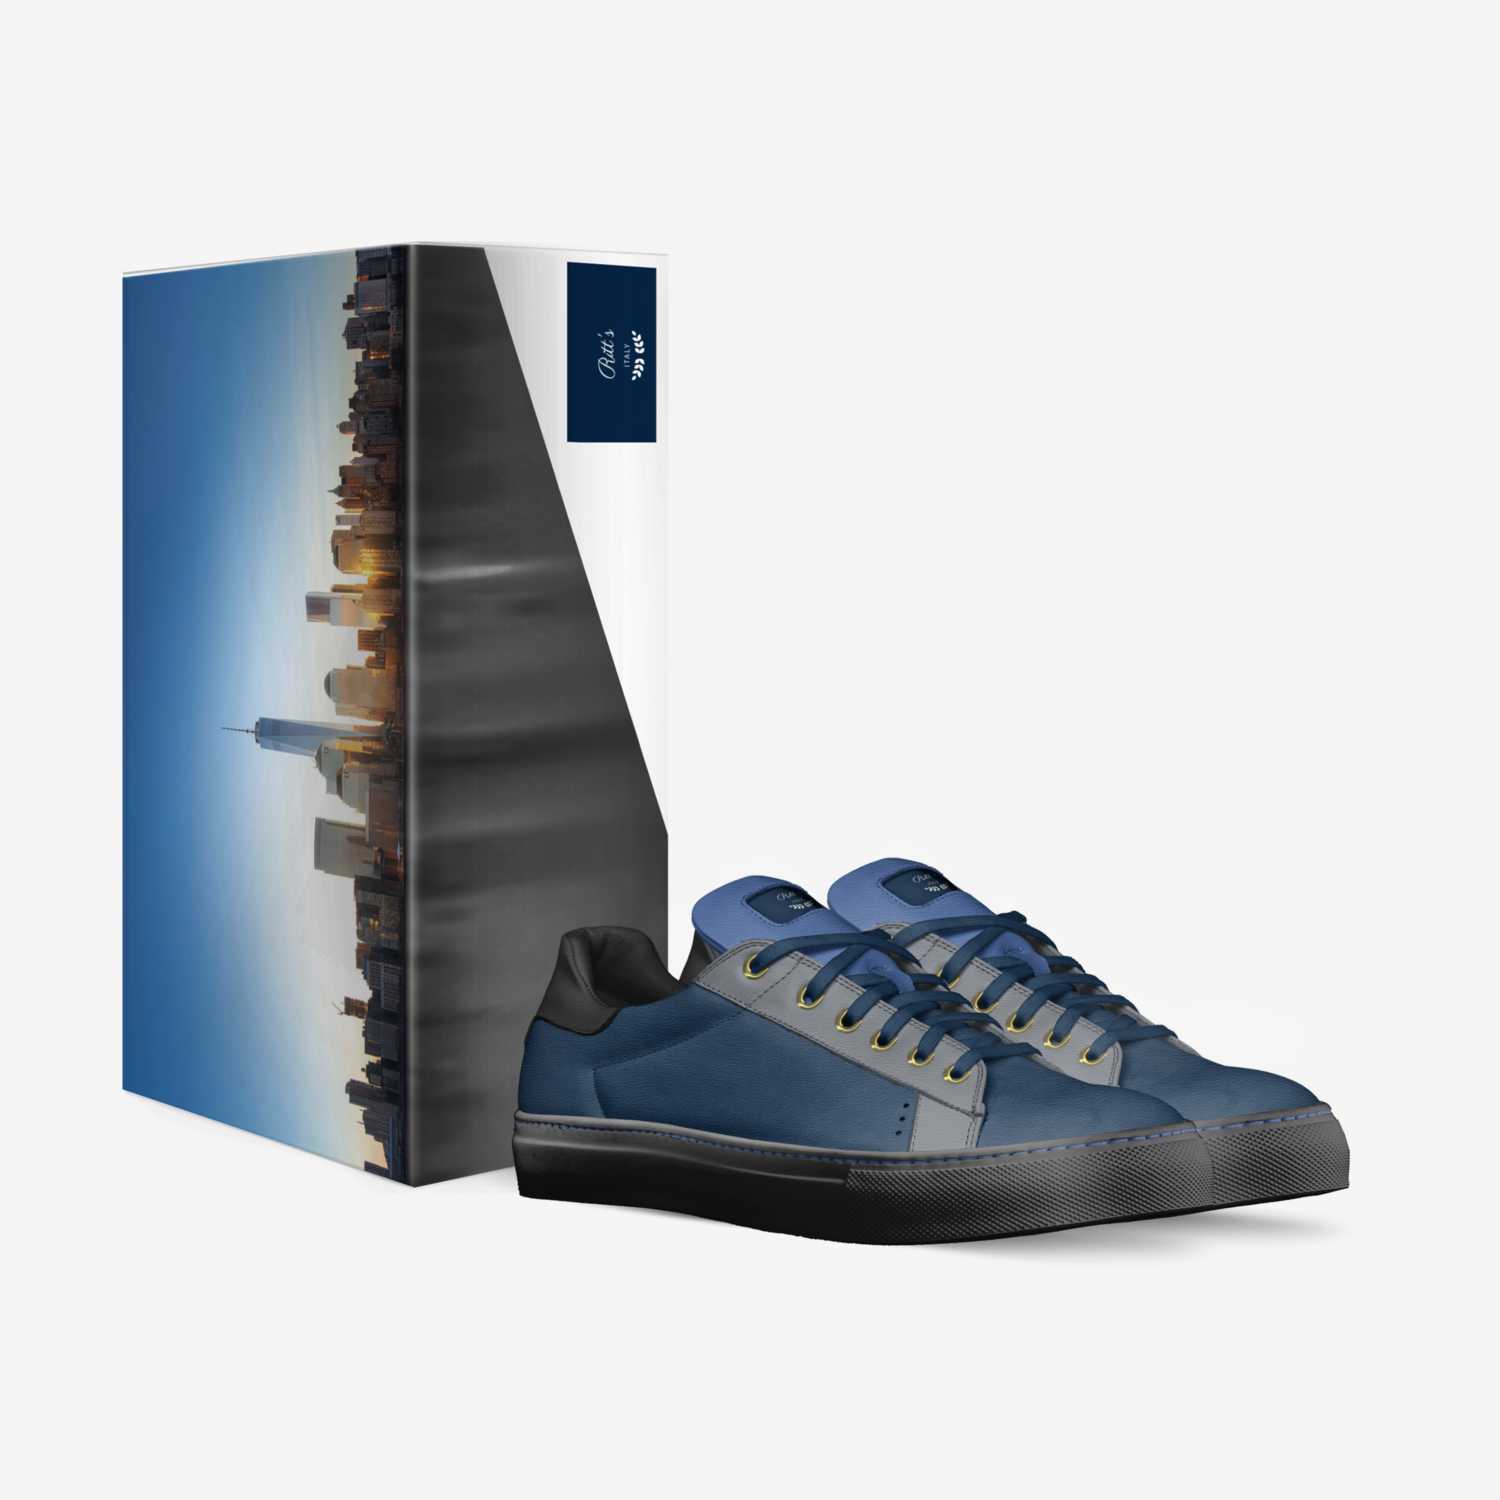 Ritt's custom made in Italy shoes by Matthew Rittenhouse | Box view